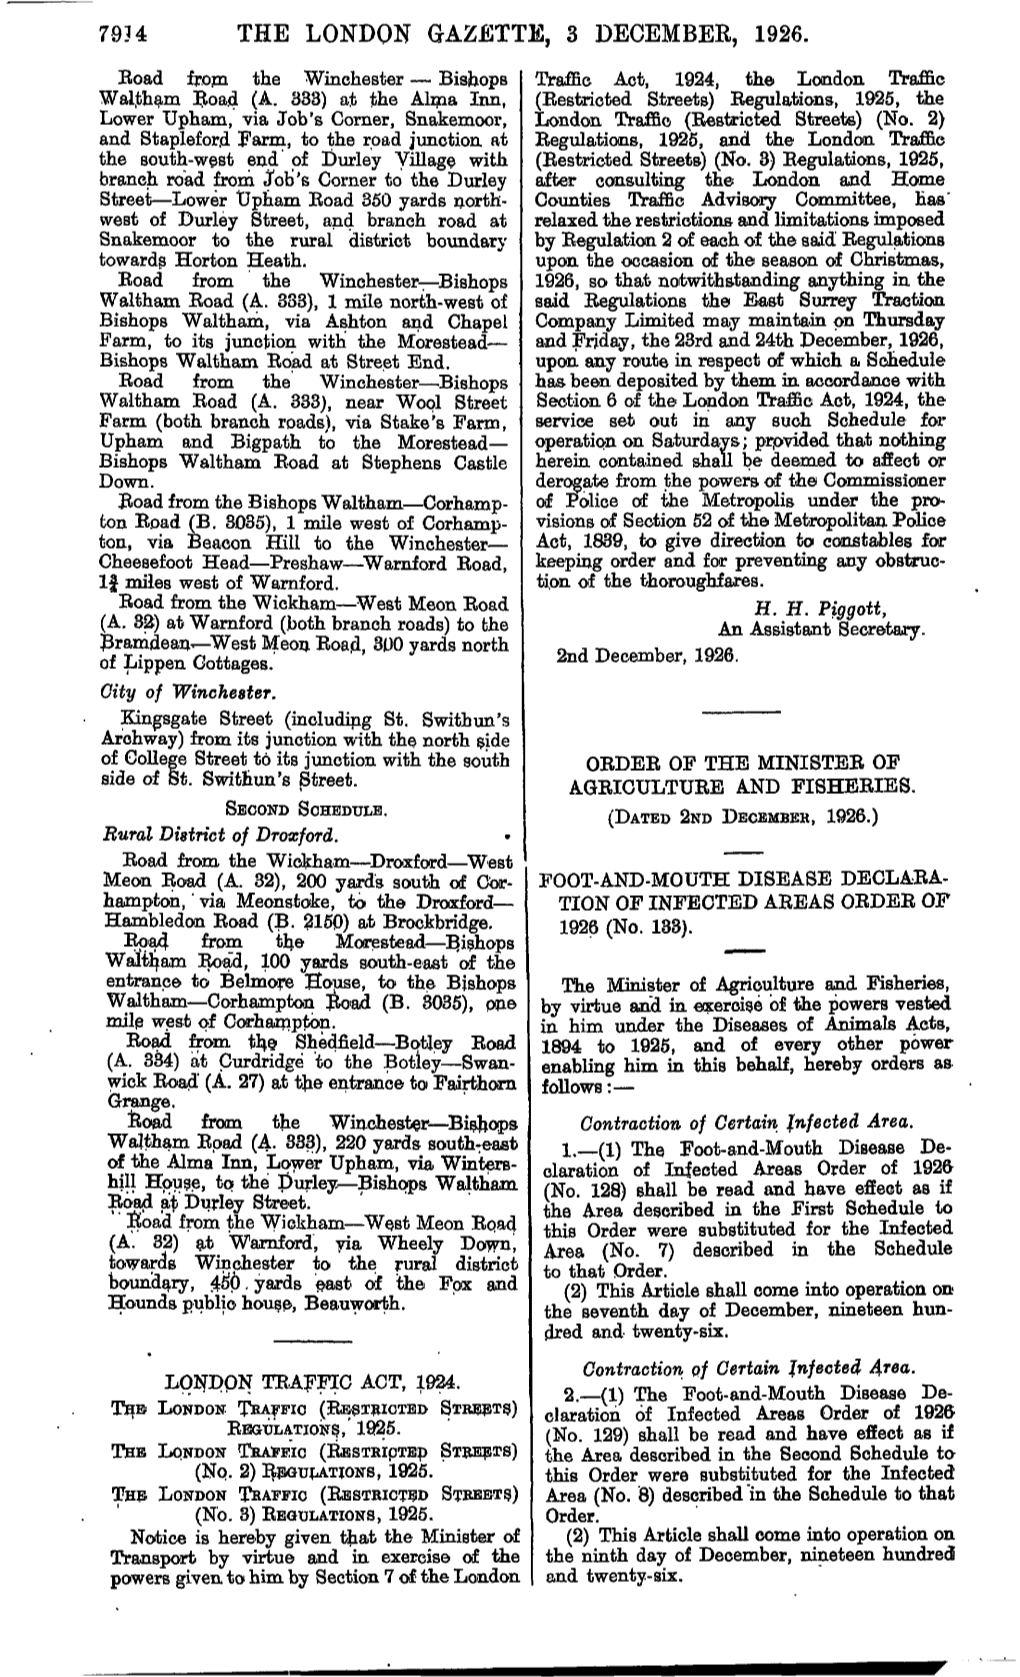 7934 the London Gazette, 3 December, 1926